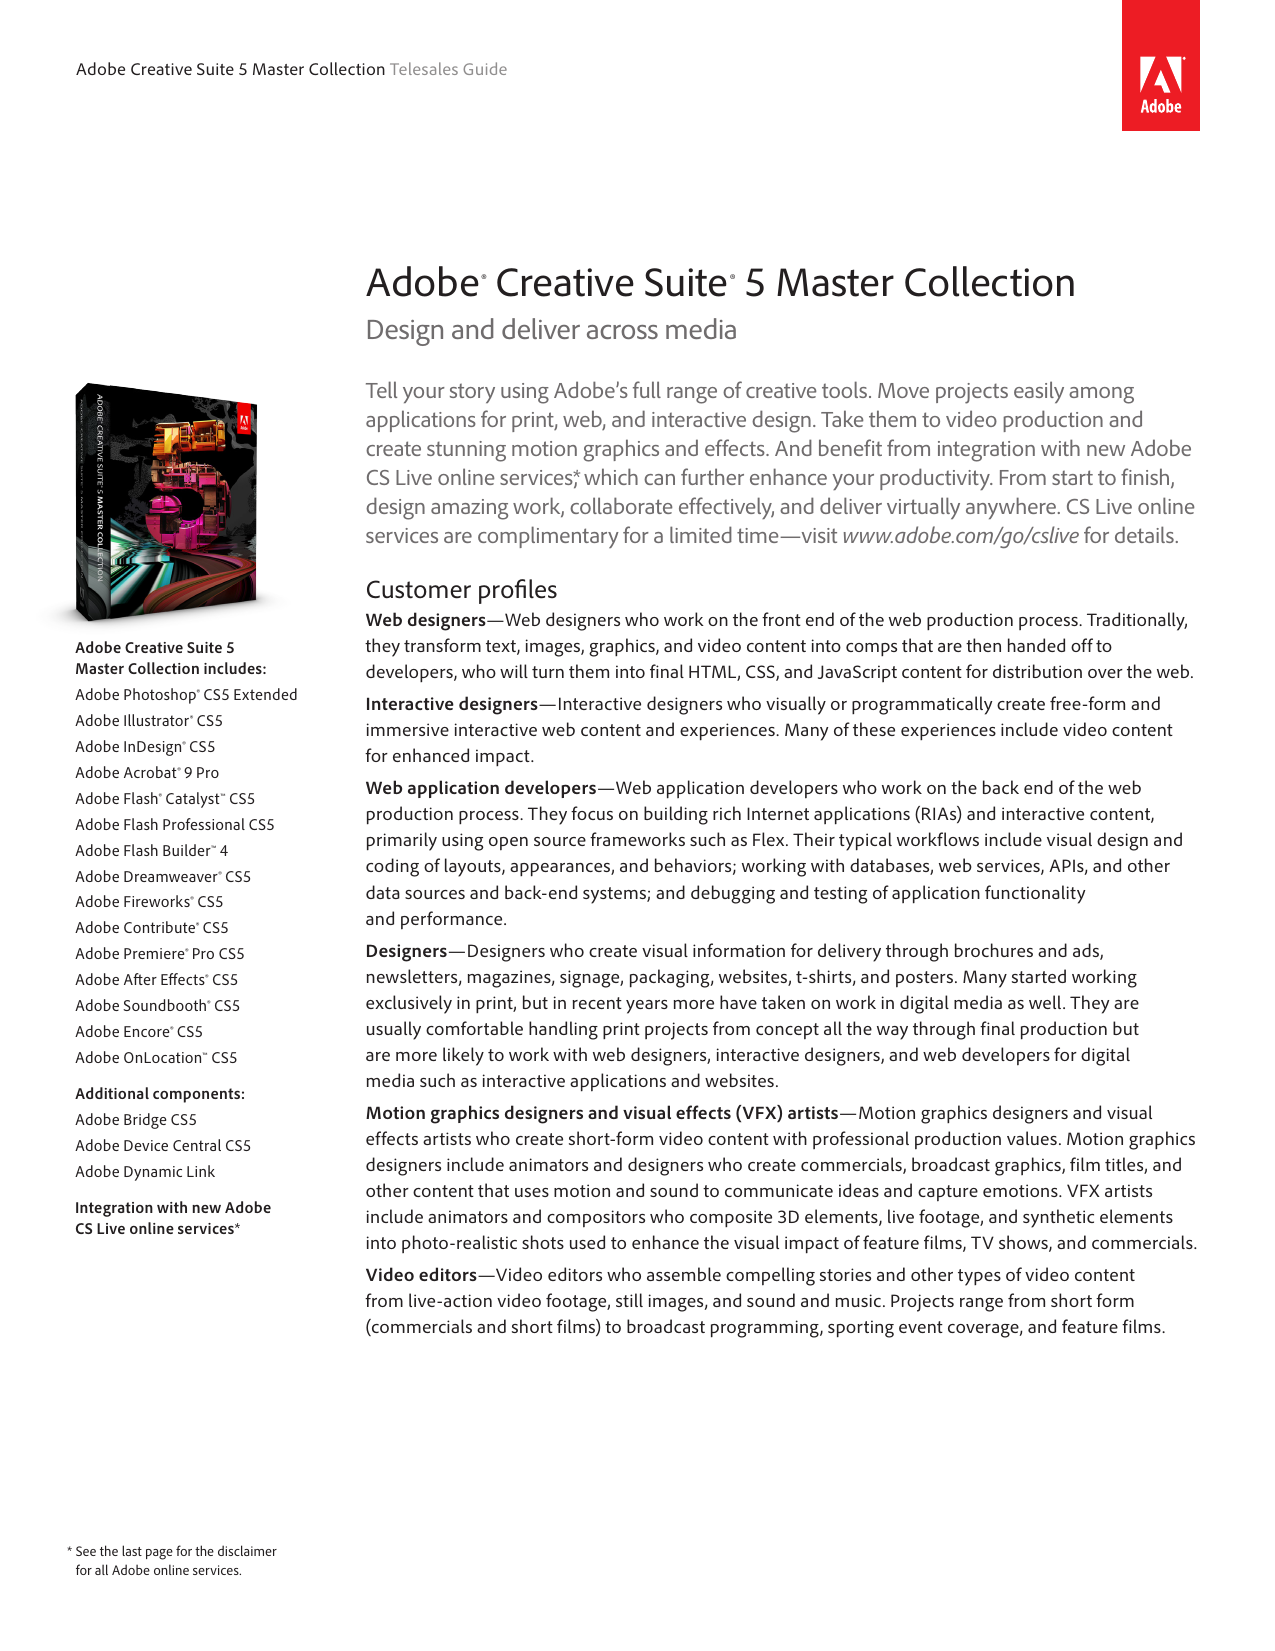 adobe master collection cs 5.5